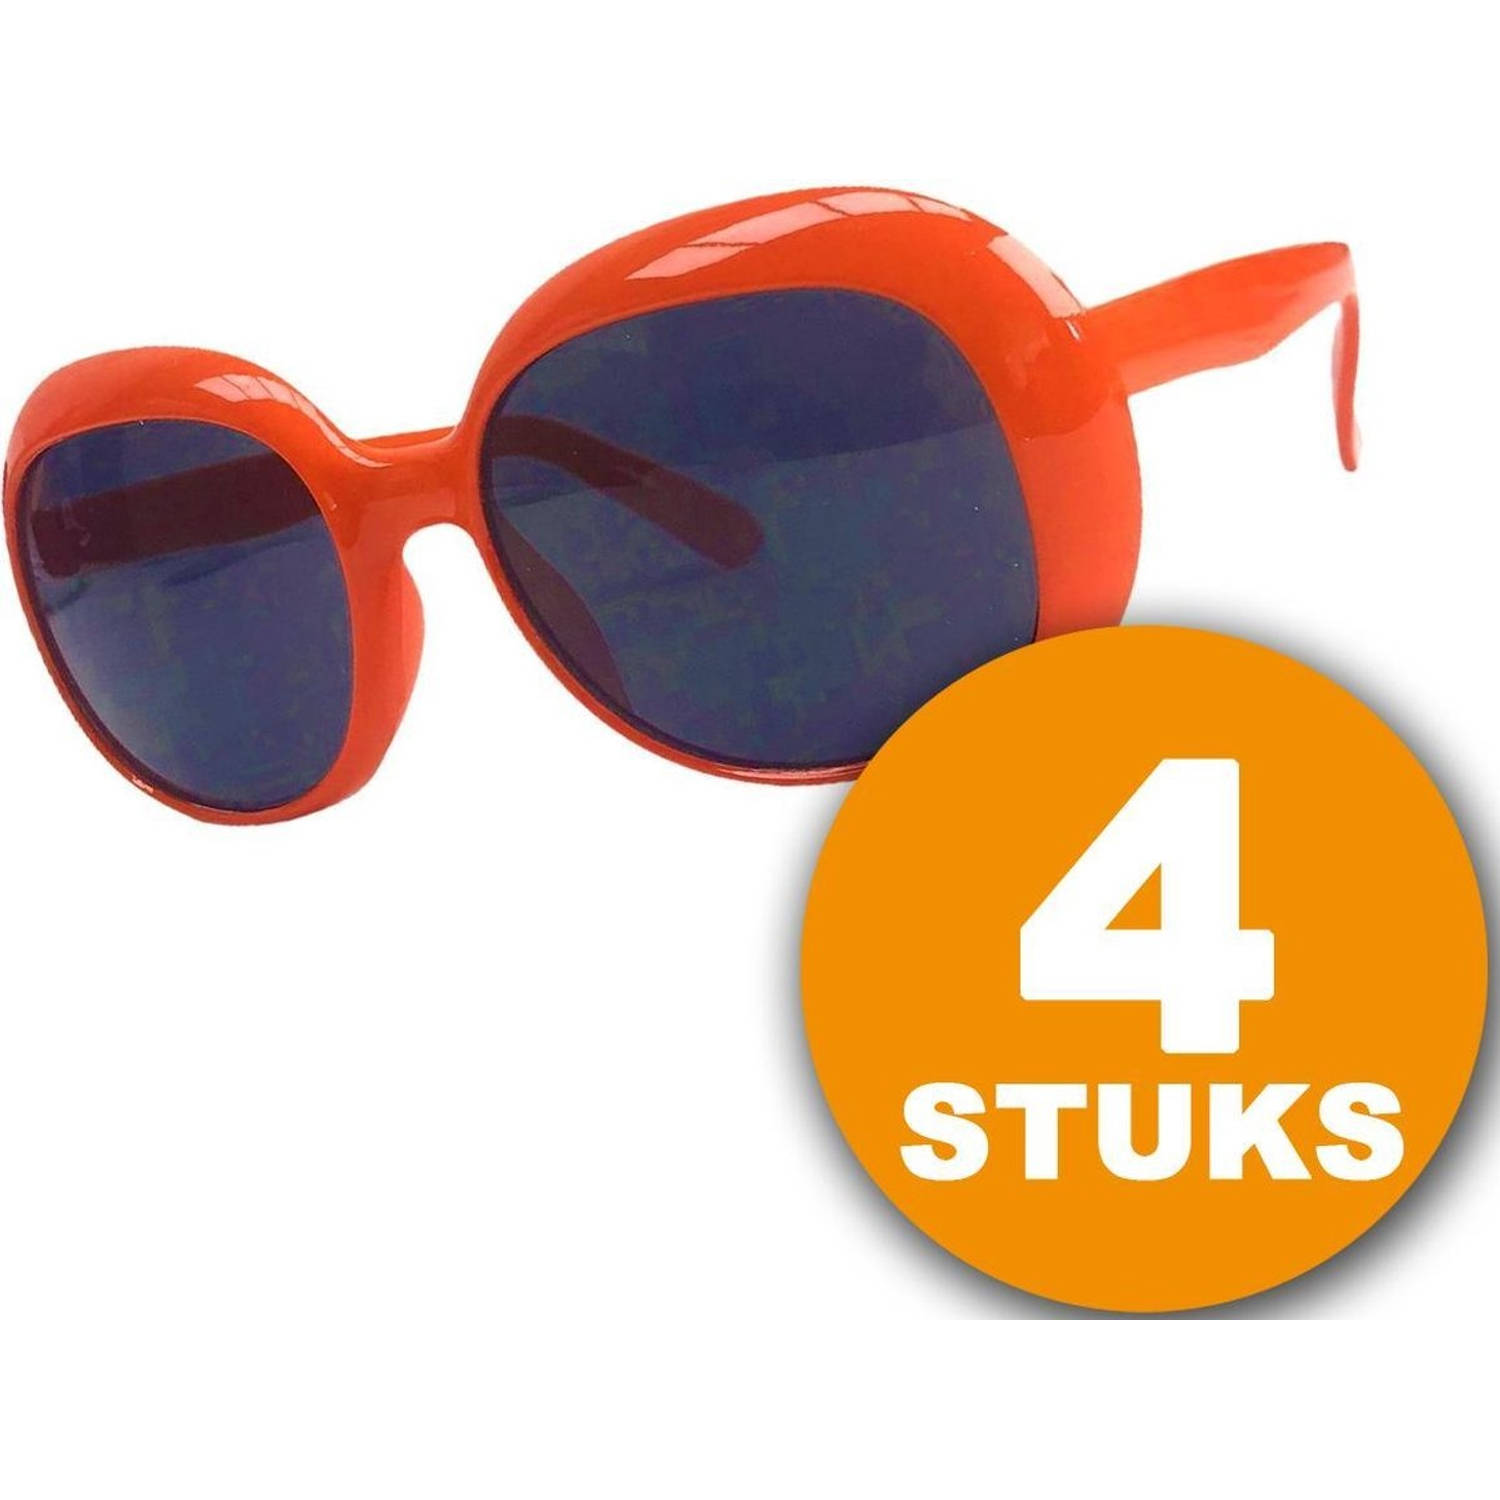 Oranje Feestbril | 4 stuks Oranje Bril Partybril "Julie" | Feestkleding EK/WK Voetbal | Oranje Versiering Versierpakket Nederlands Elftal Oranjepakket